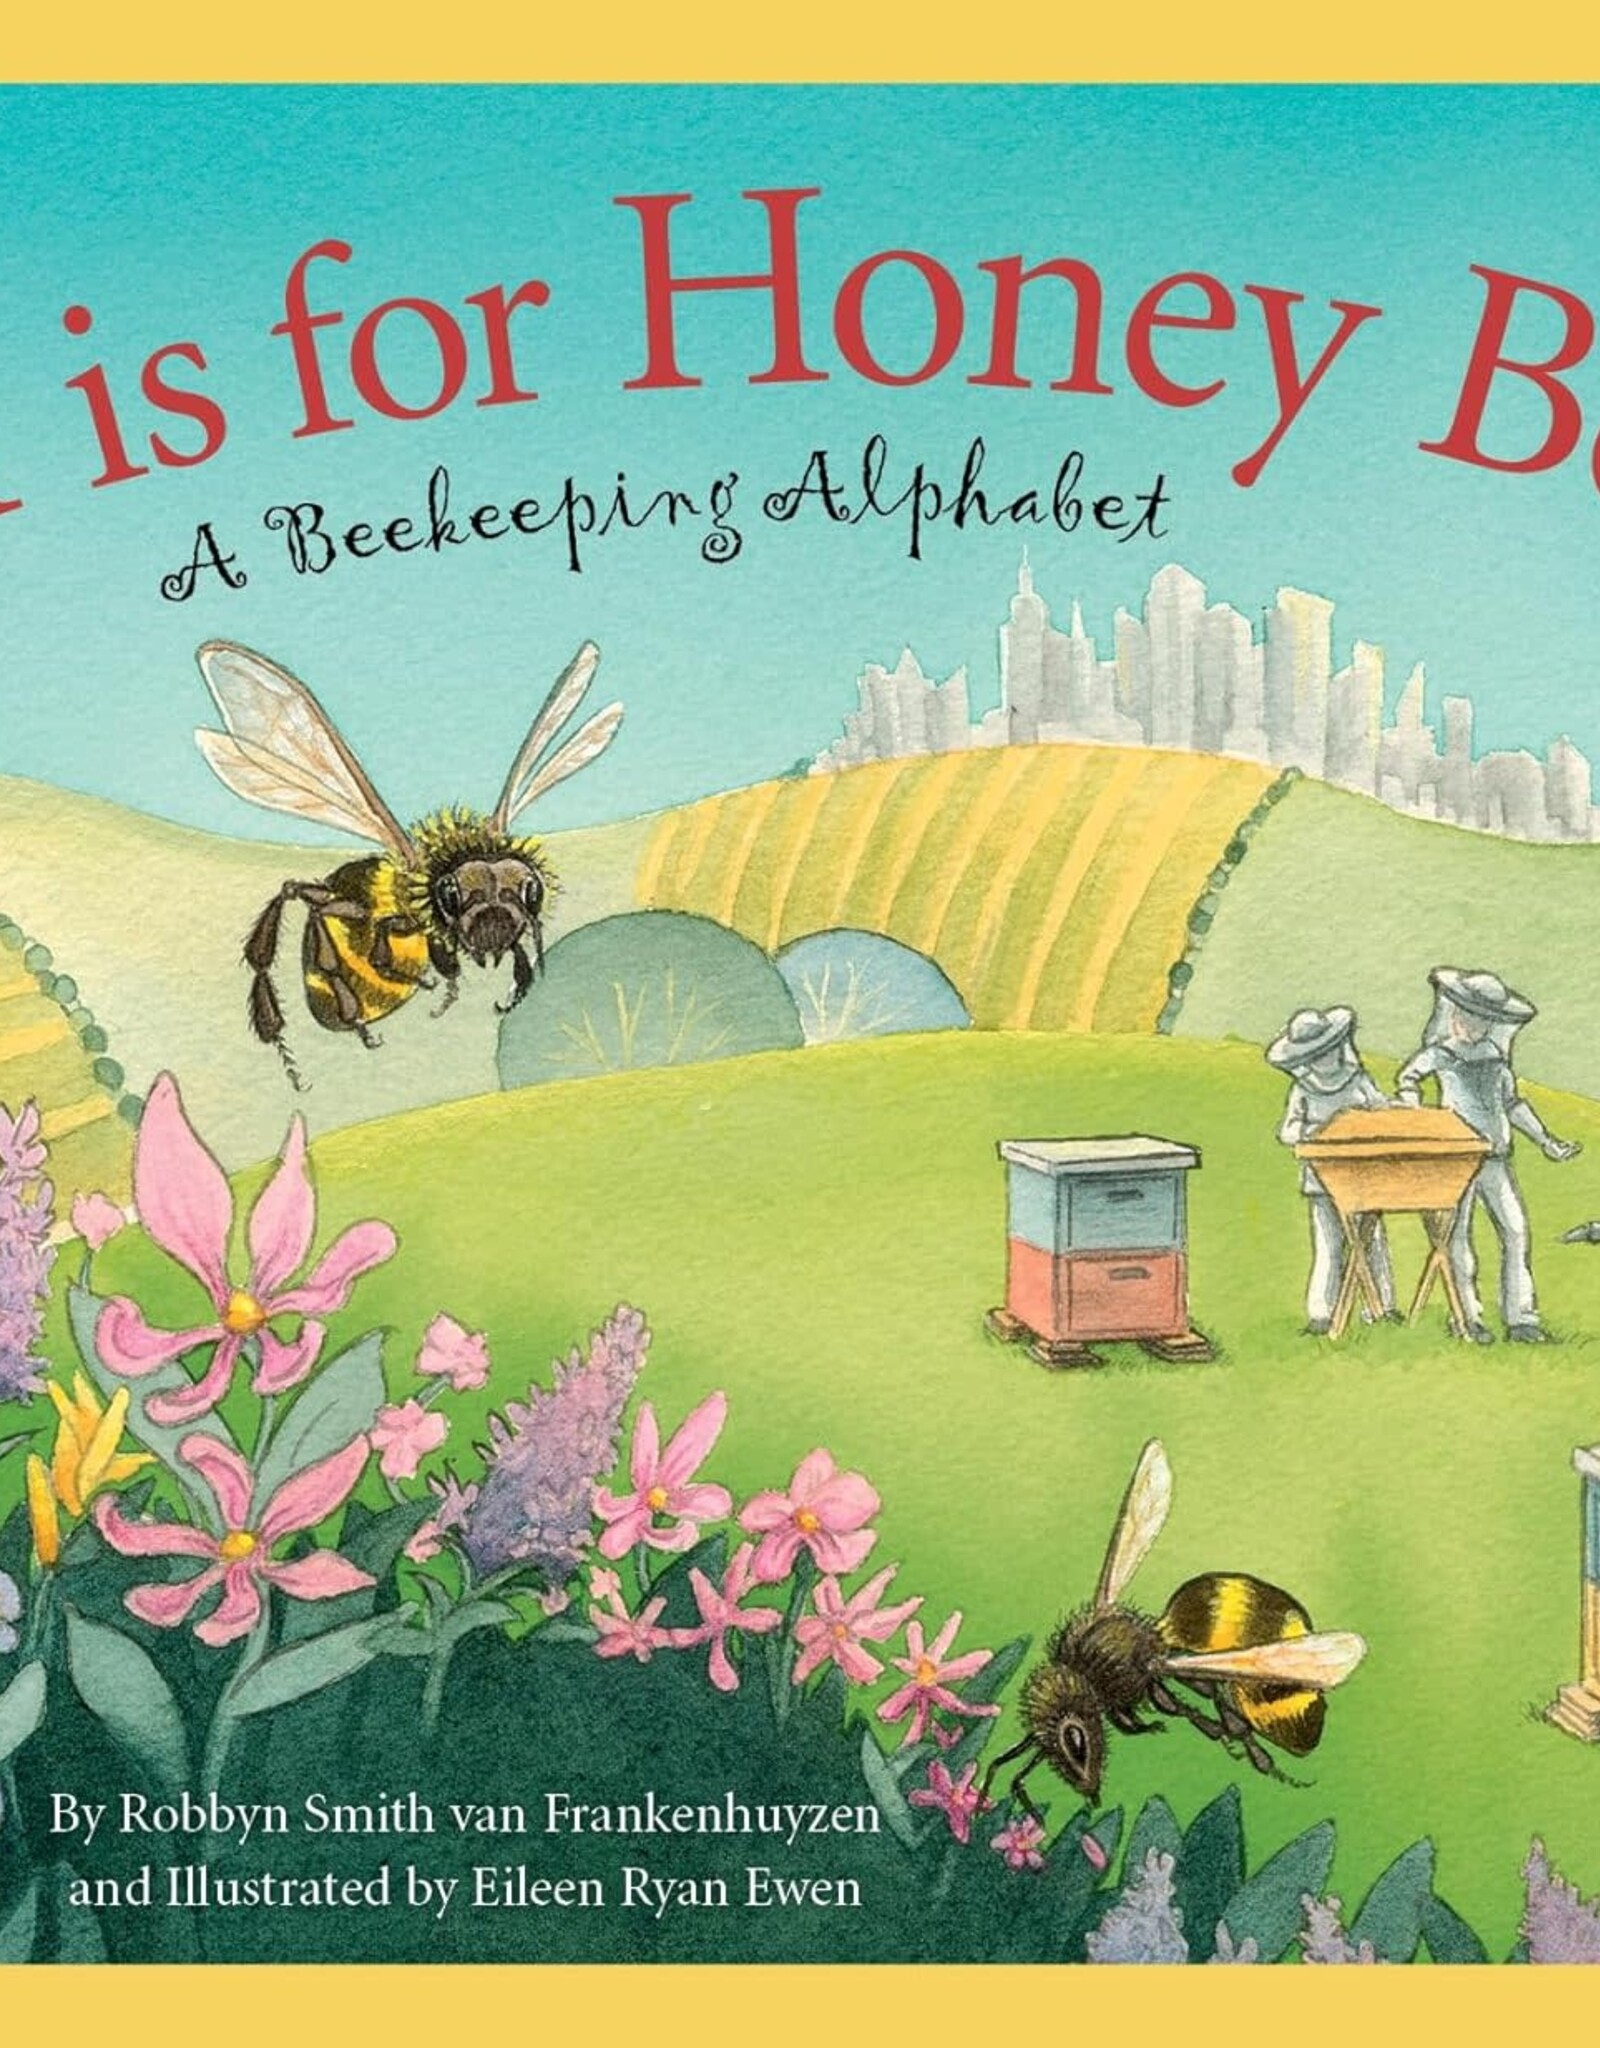 Sleeping Bear Press H is for Honey Bee: A Beekeeping Alphabet